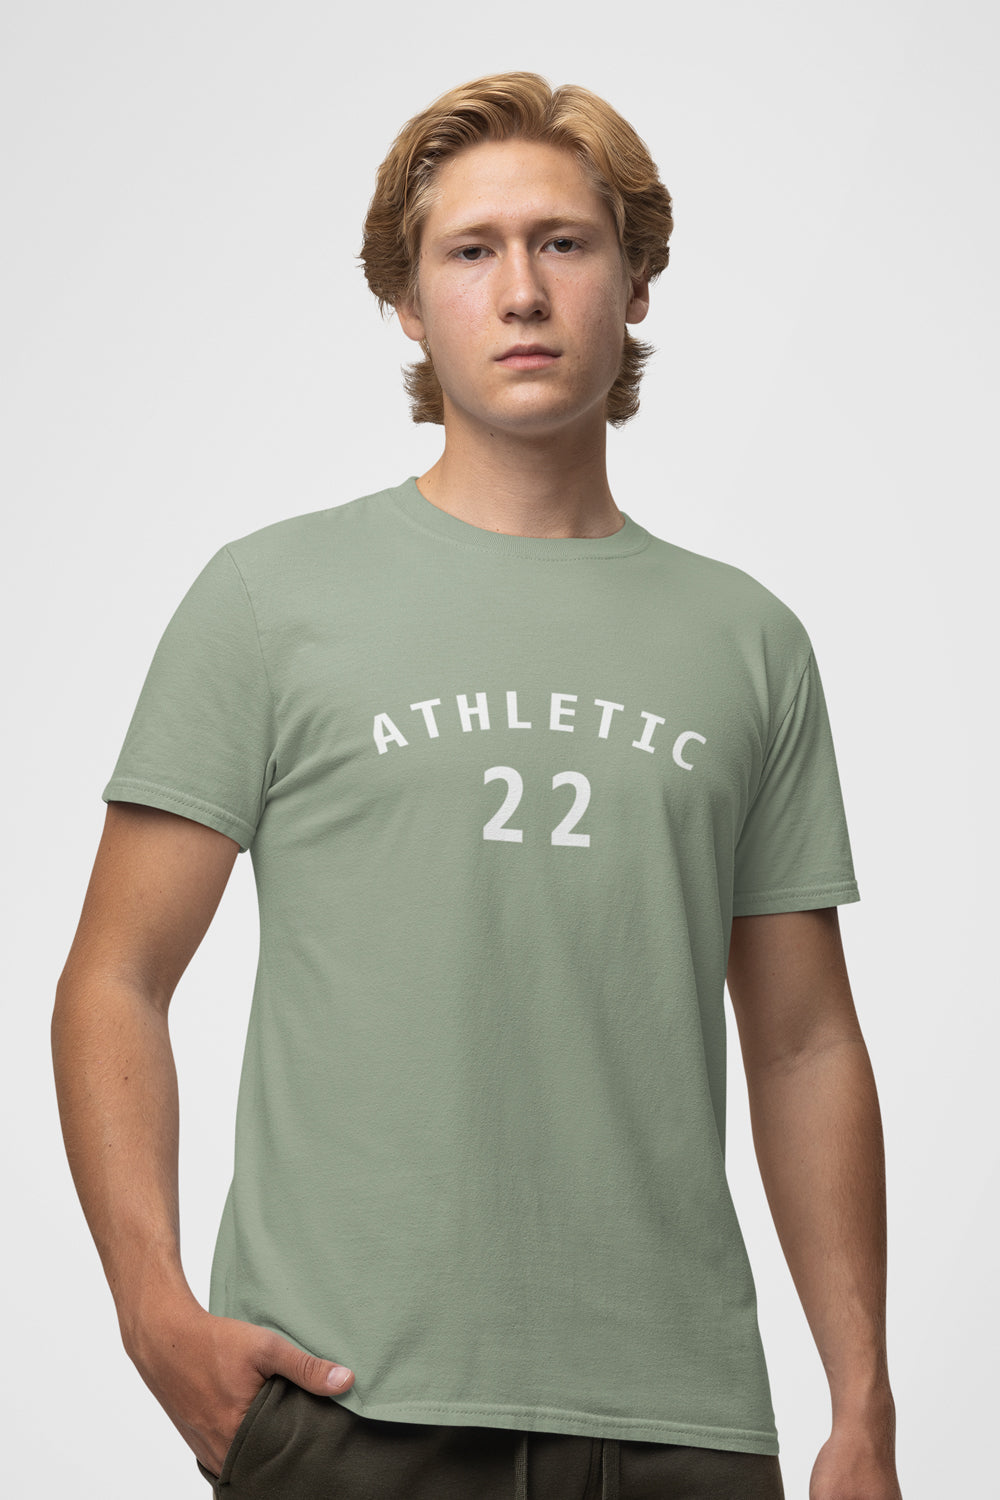 Athletic Graphic Printed Pastel Green Tshirt